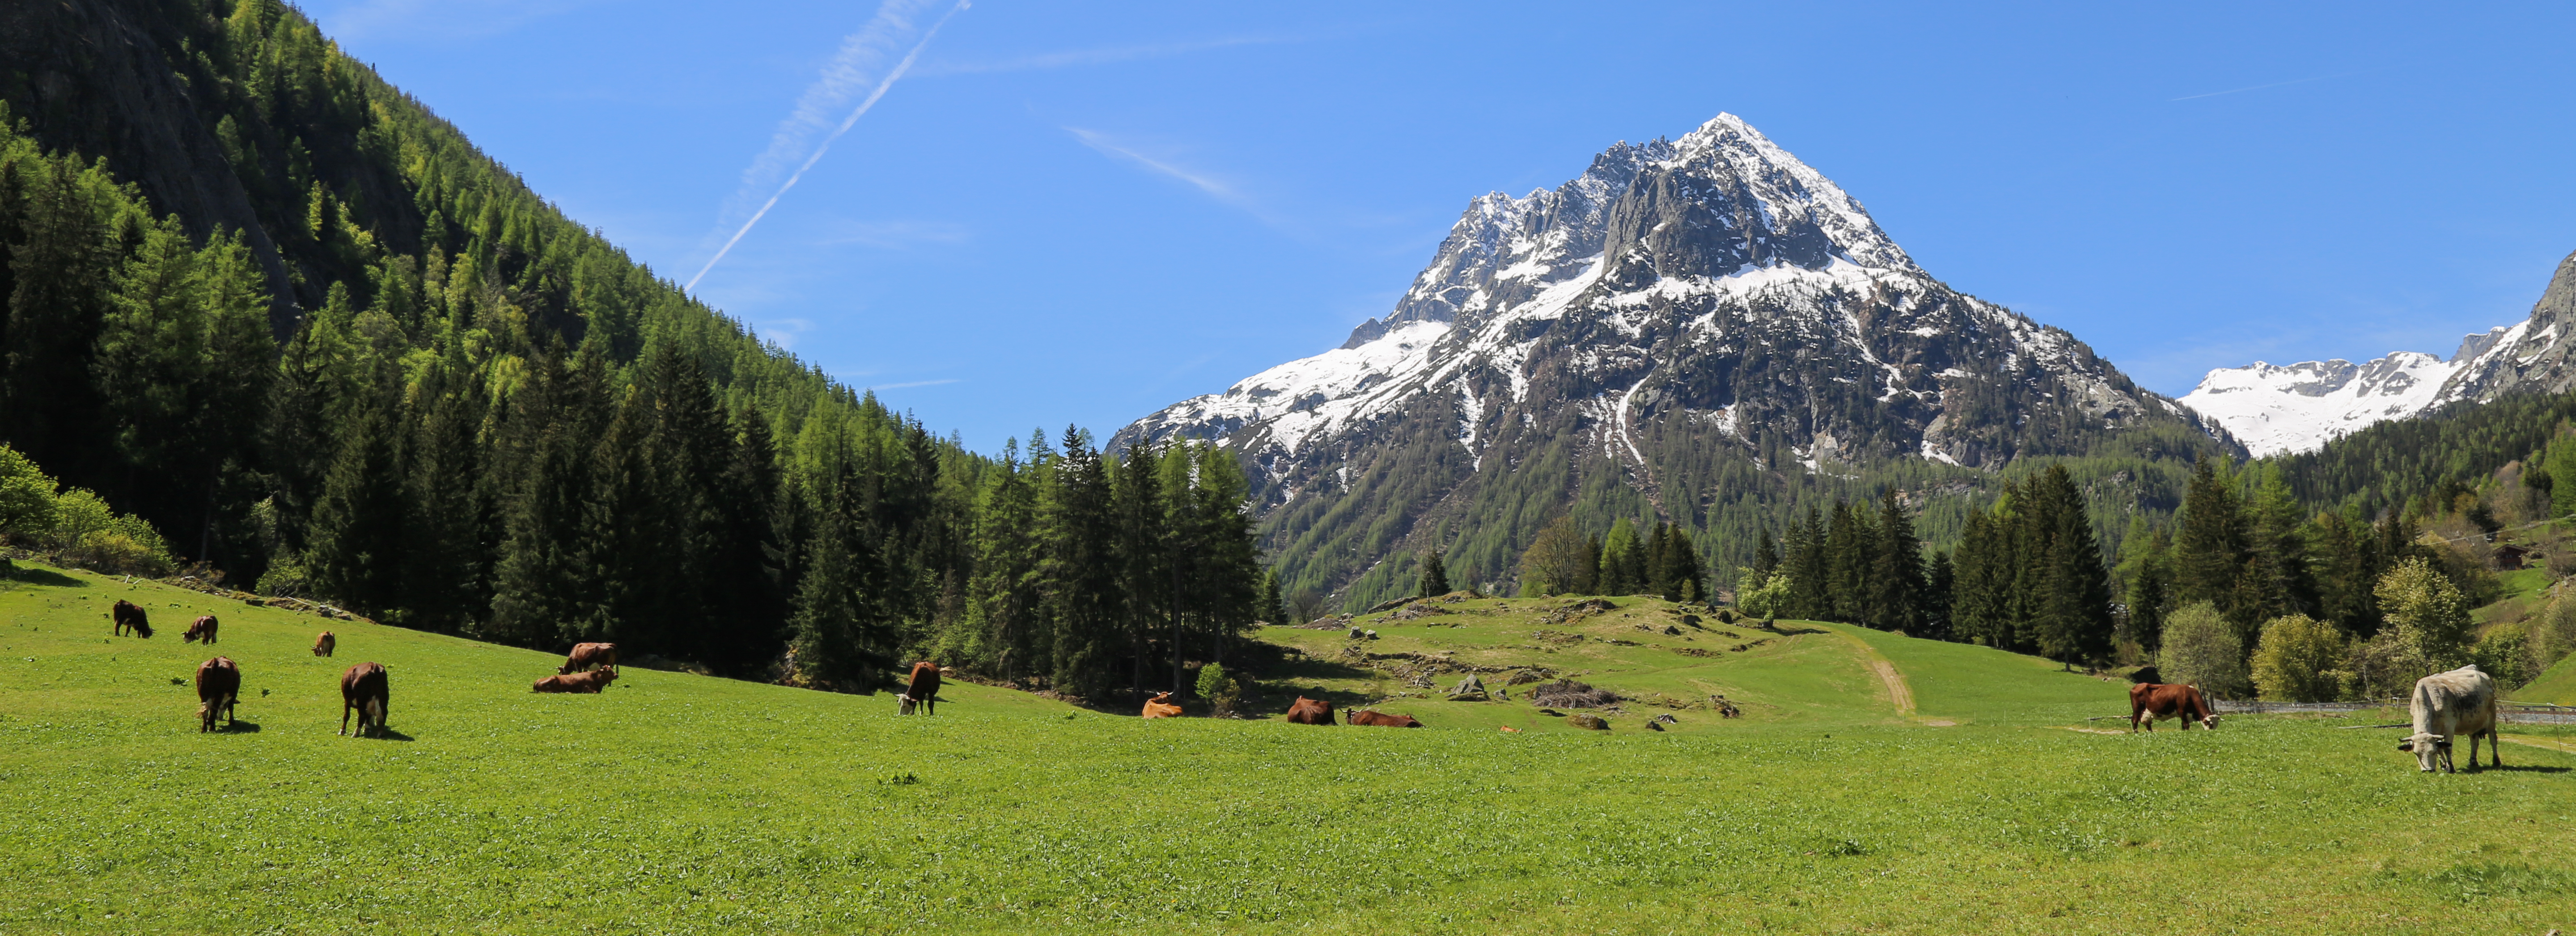 OT Vallée de Chamonix - Salomé ABRIAL-7861